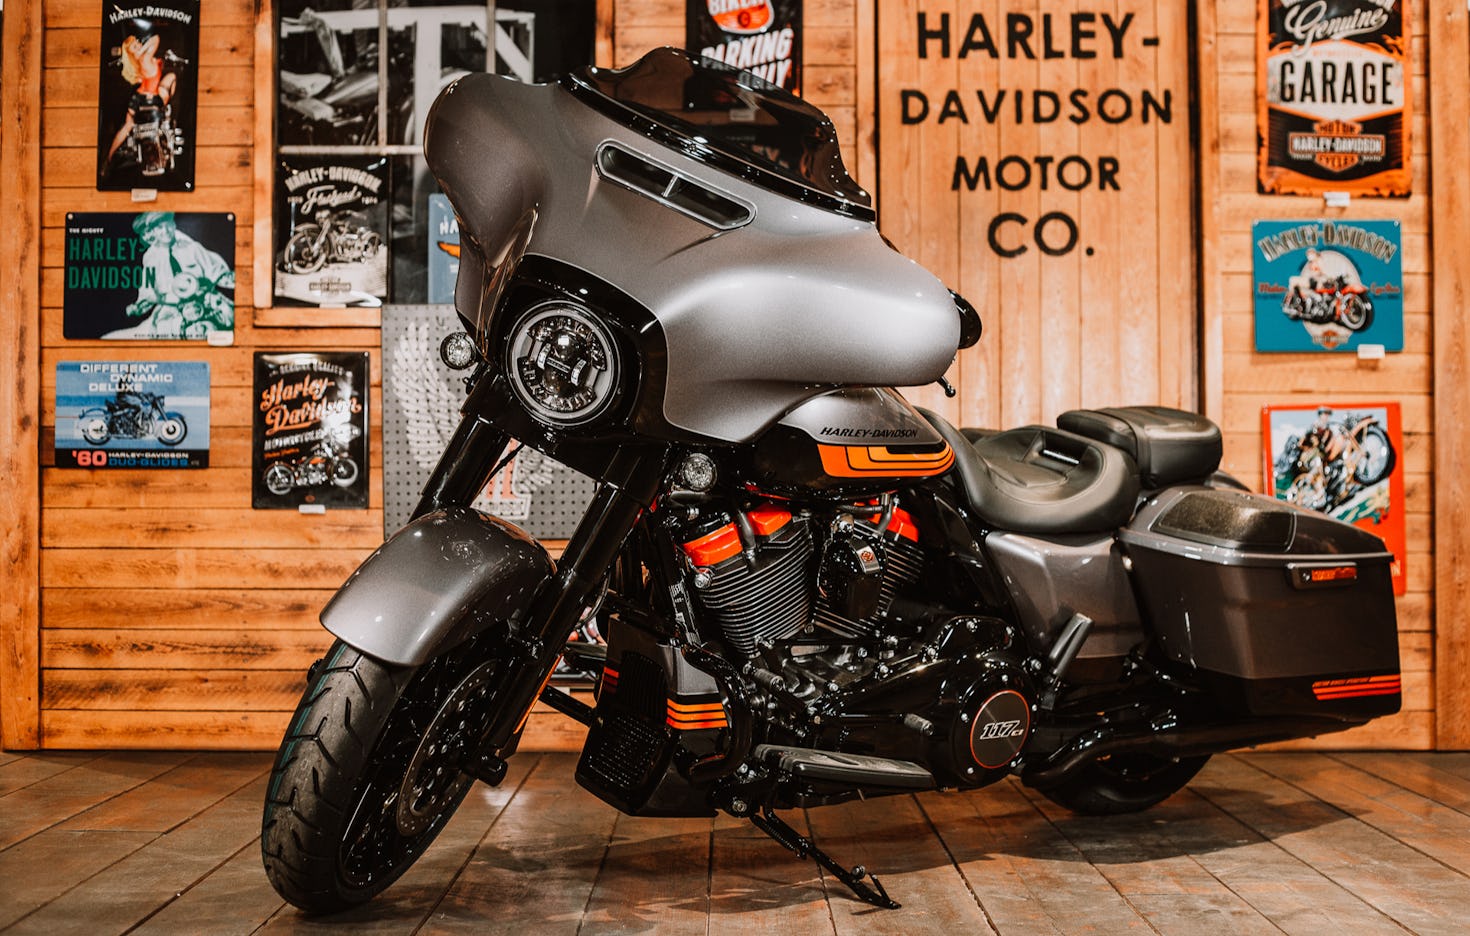 Harley-Davidson fahren (24 Std.) Hannover